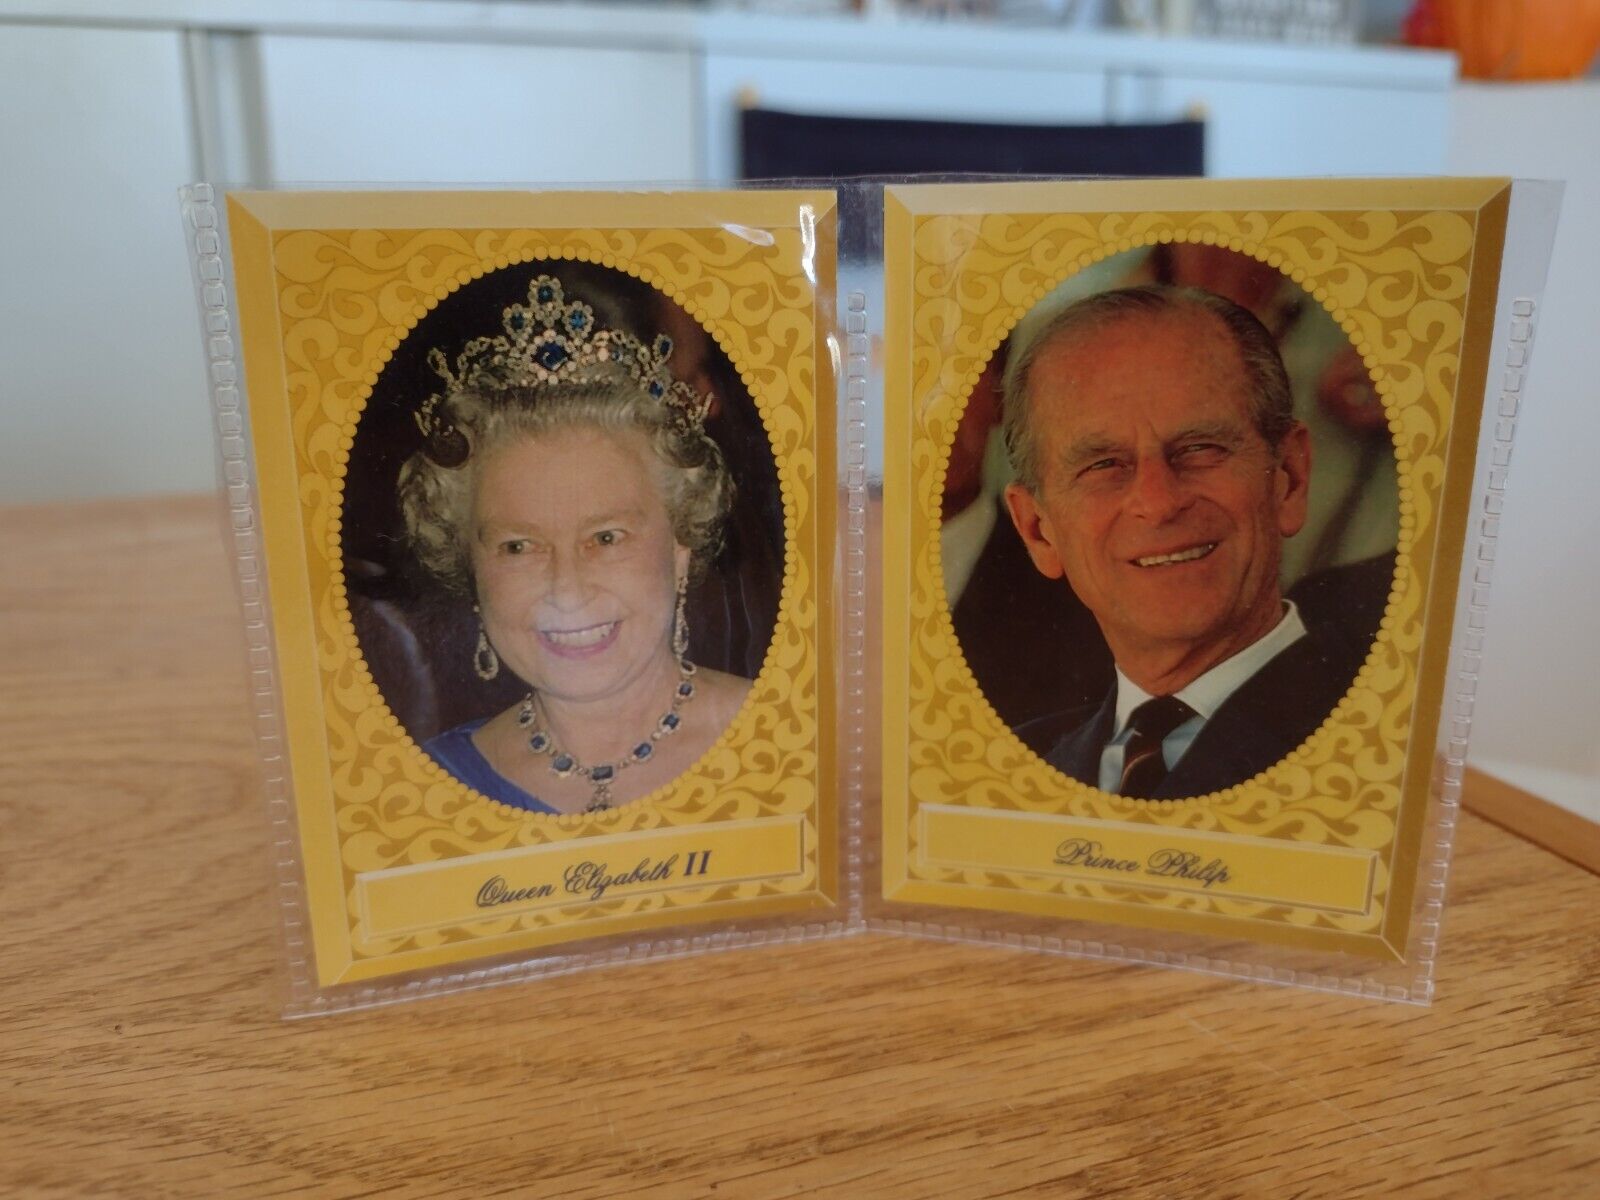 Queen Elizabeth II and Prince Philip 1993 Press Pass Collectors Cards #92 & #93